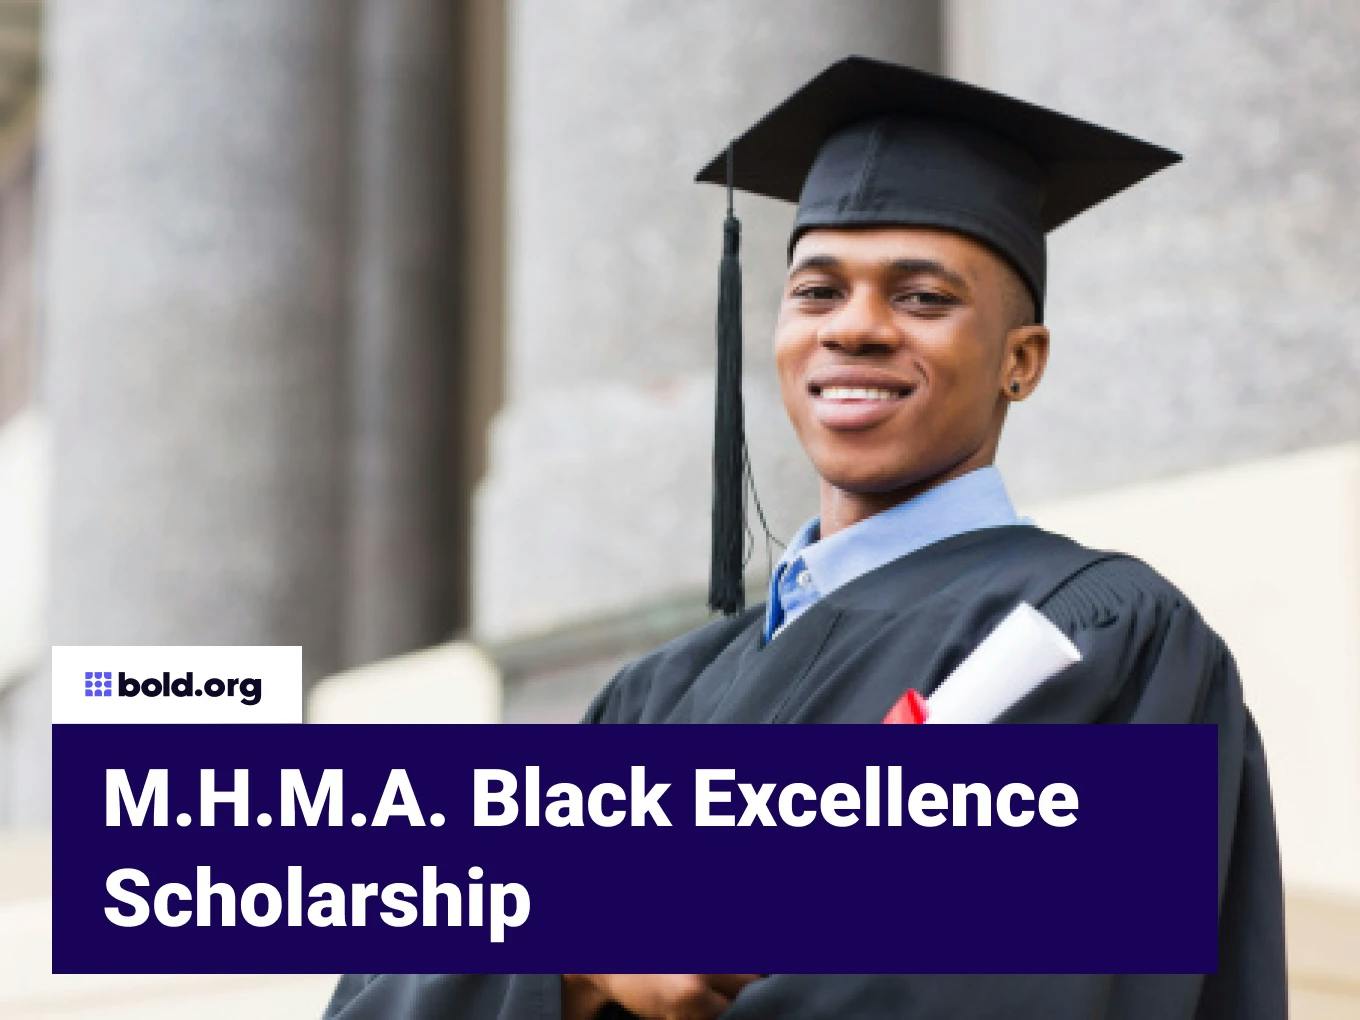 M.H.M.A Black Excellence Scholarship